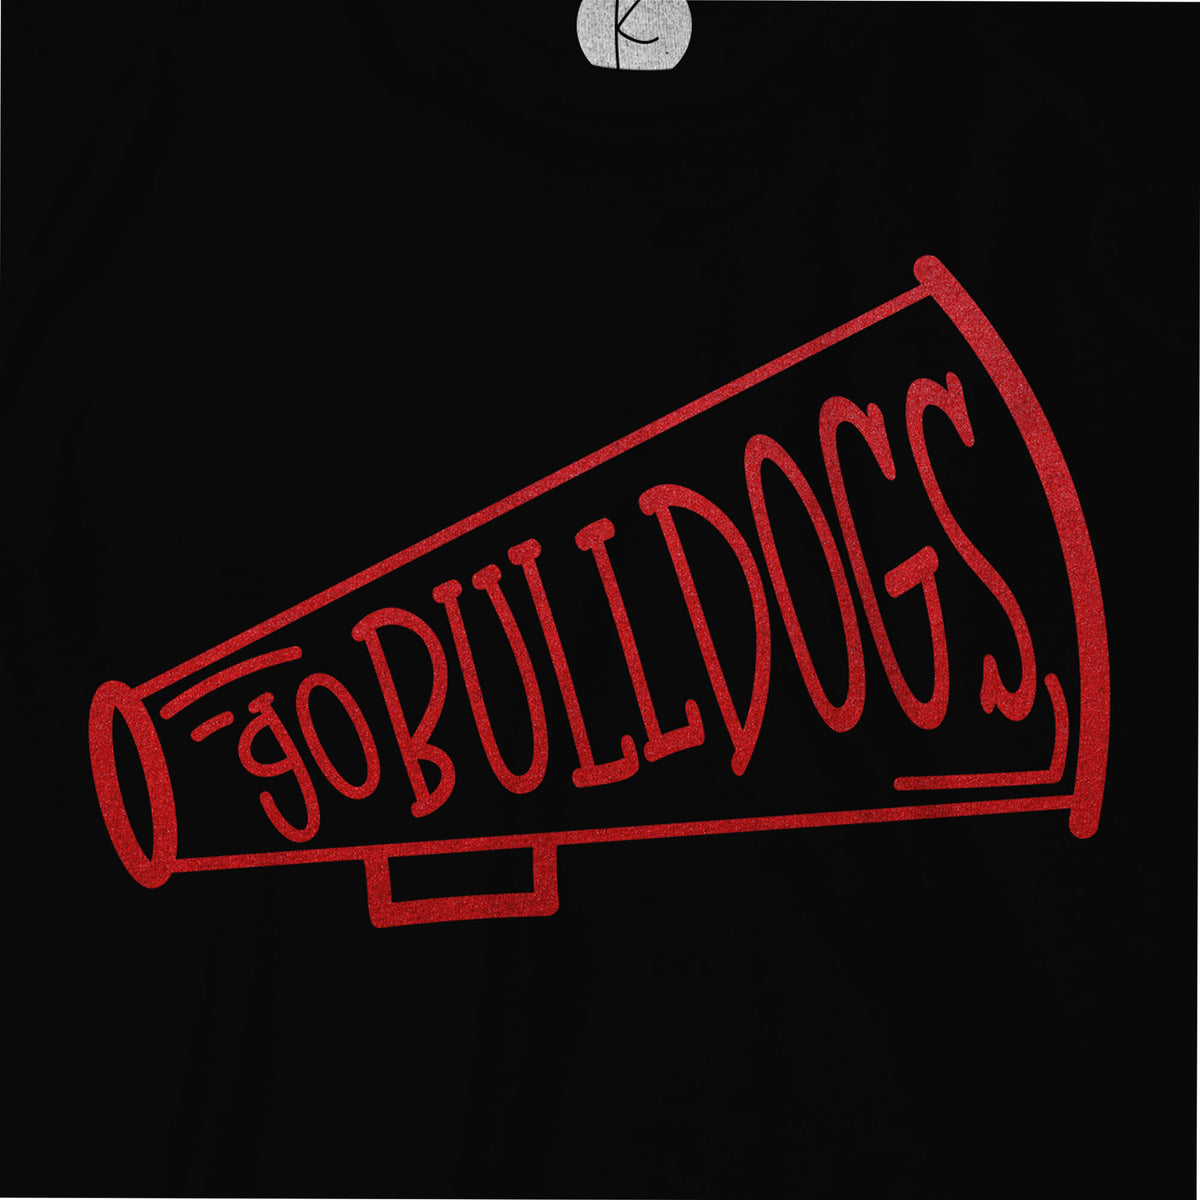 Bulldogs Cheer Bundle | SVG DXF EPS PNG Cut Files